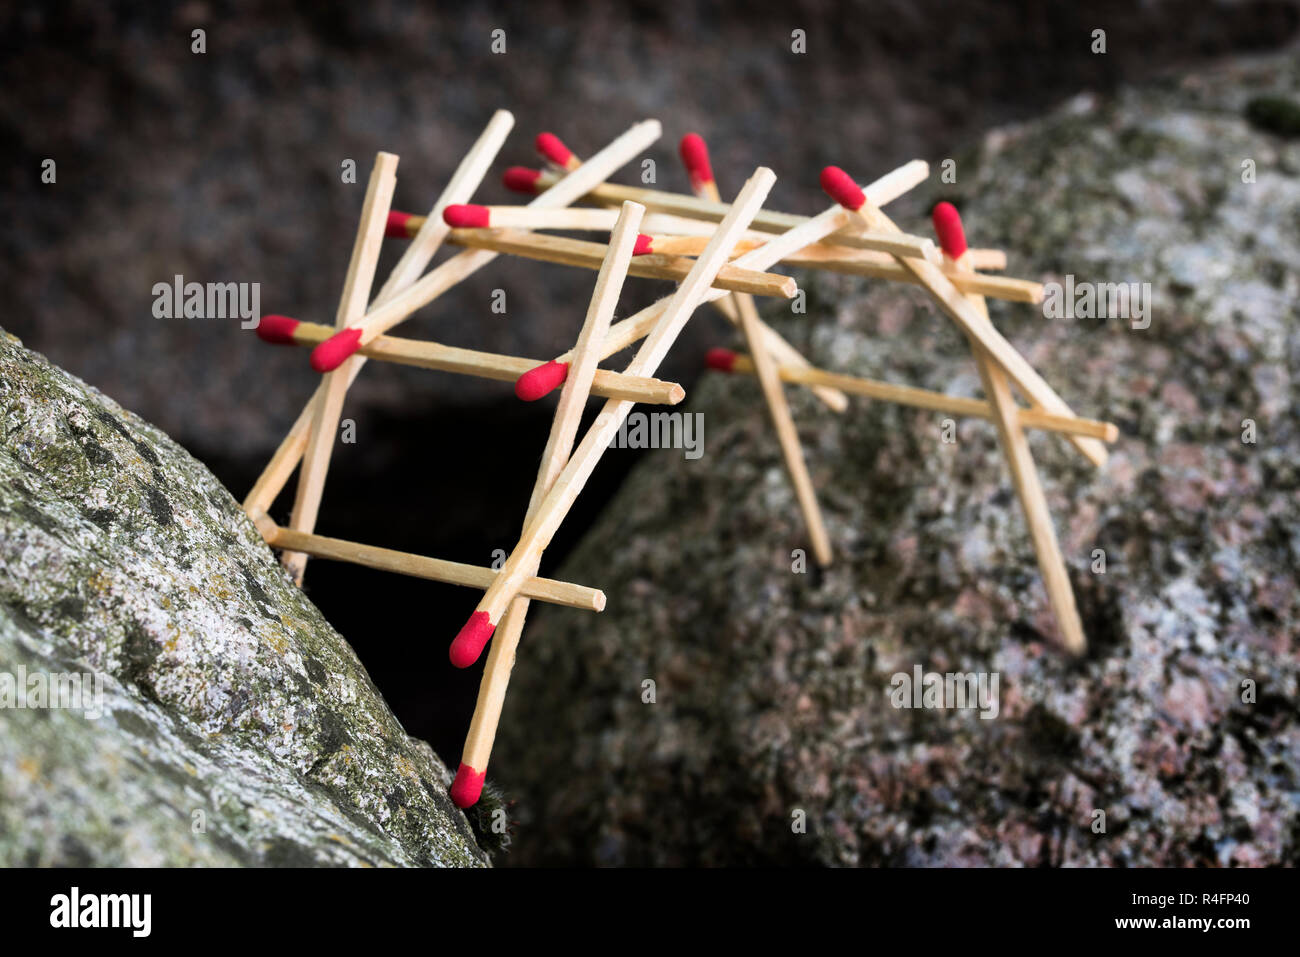 leonardo da vinci's self supporting bridge built from matches between big rocks, selected focus, narrow depth of field Stock Photo